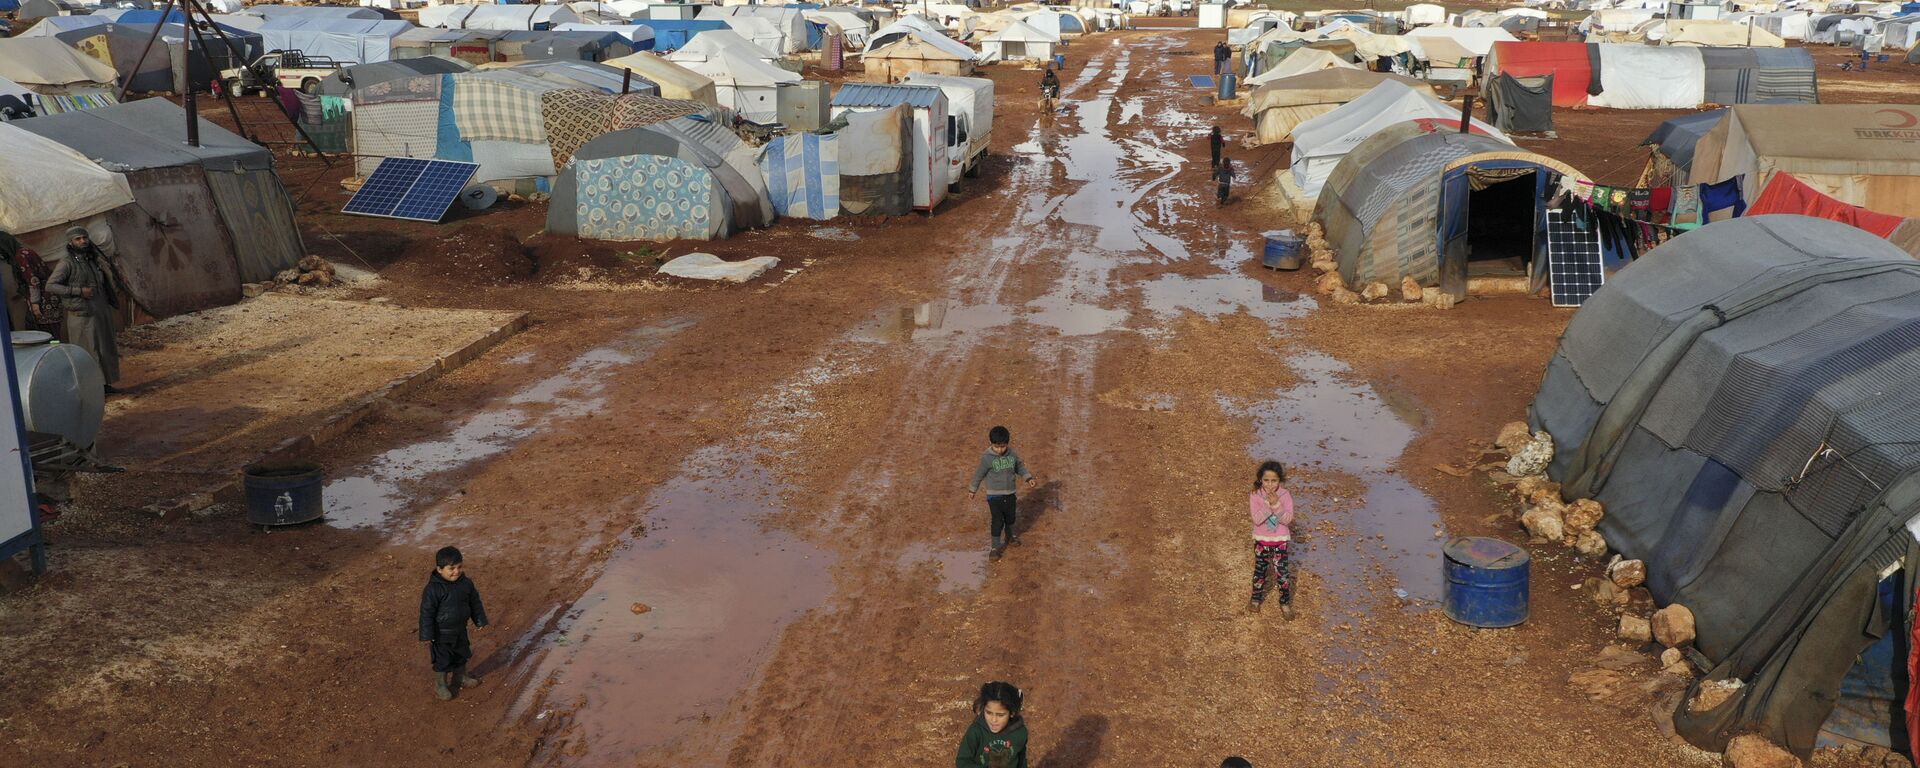 Syrian refugees walk through a camp for displaced muddied by recent rains near the village of Kafr Aruq , in Idlib province, Syria, Thursday, Jan. 28, 2021. - Sputnik International, 1920, 06.03.2021